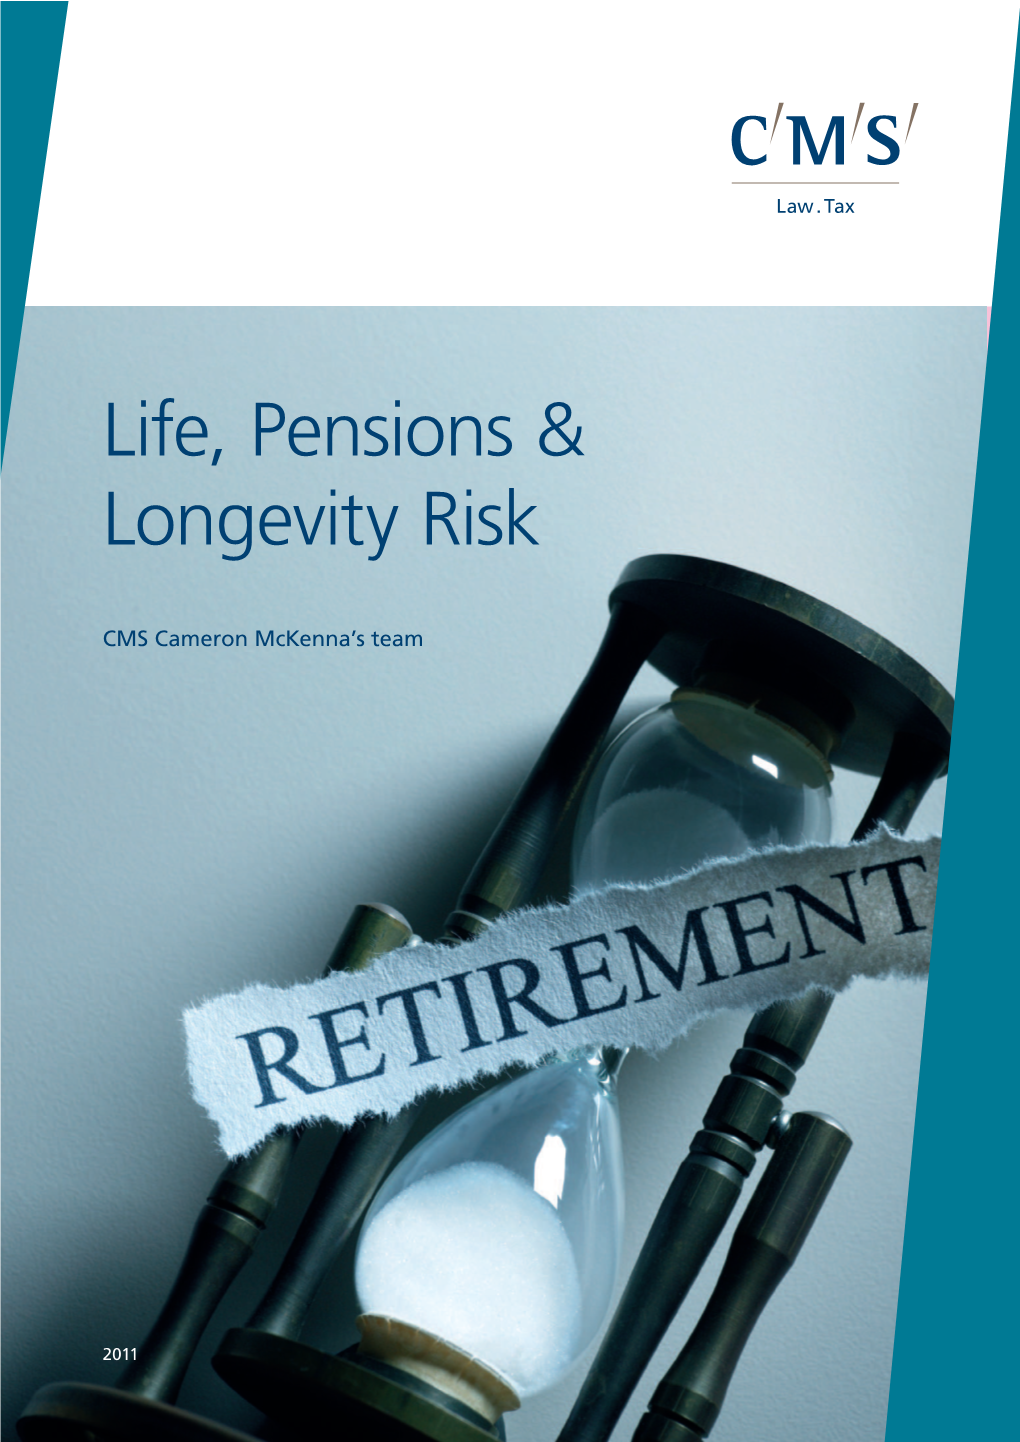 Life, Pensions & Longevity Risk